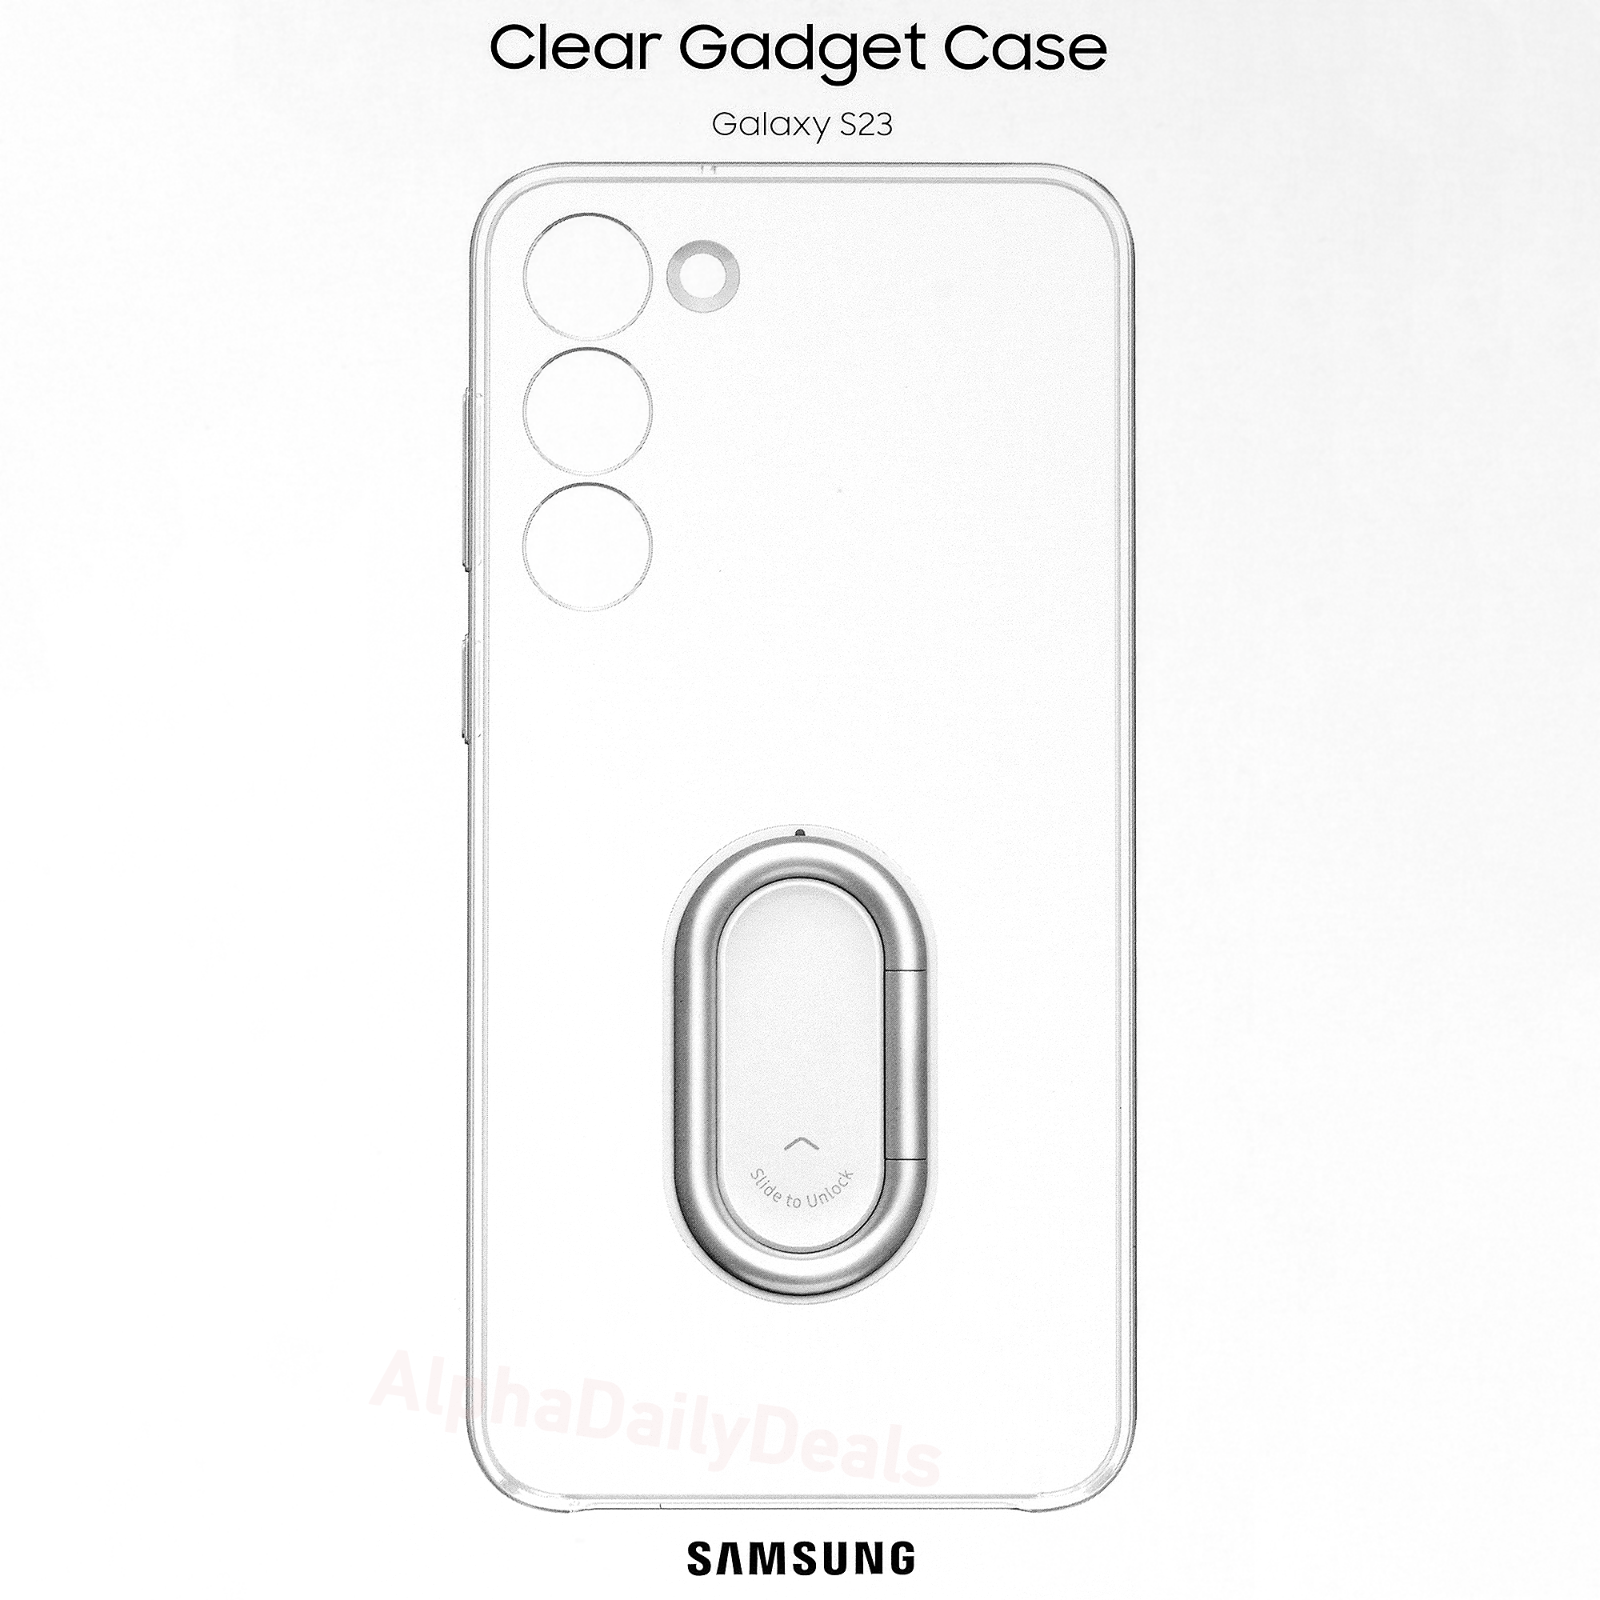 Genuine OEM Samsung Galaxy S23 Clear Gadget Case with Kickstand